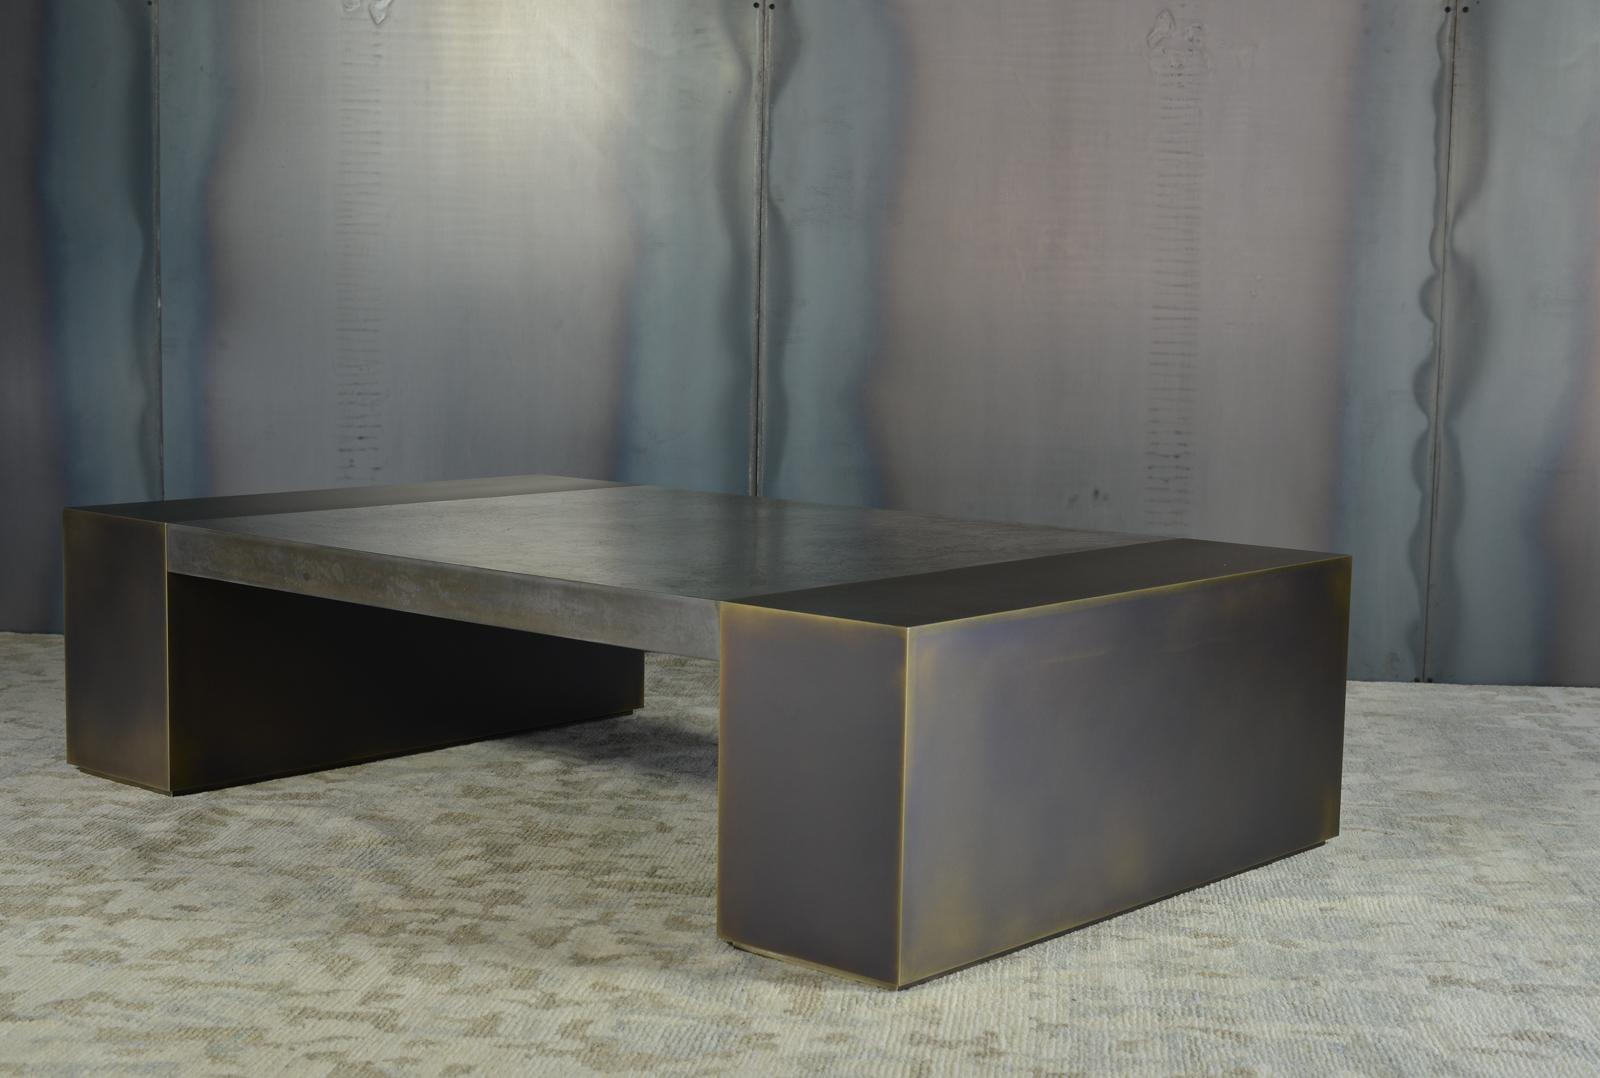 LUMA Design Workshop Block Coffee Table in Dark Resin and Textured Bronze Metal For Sale 4